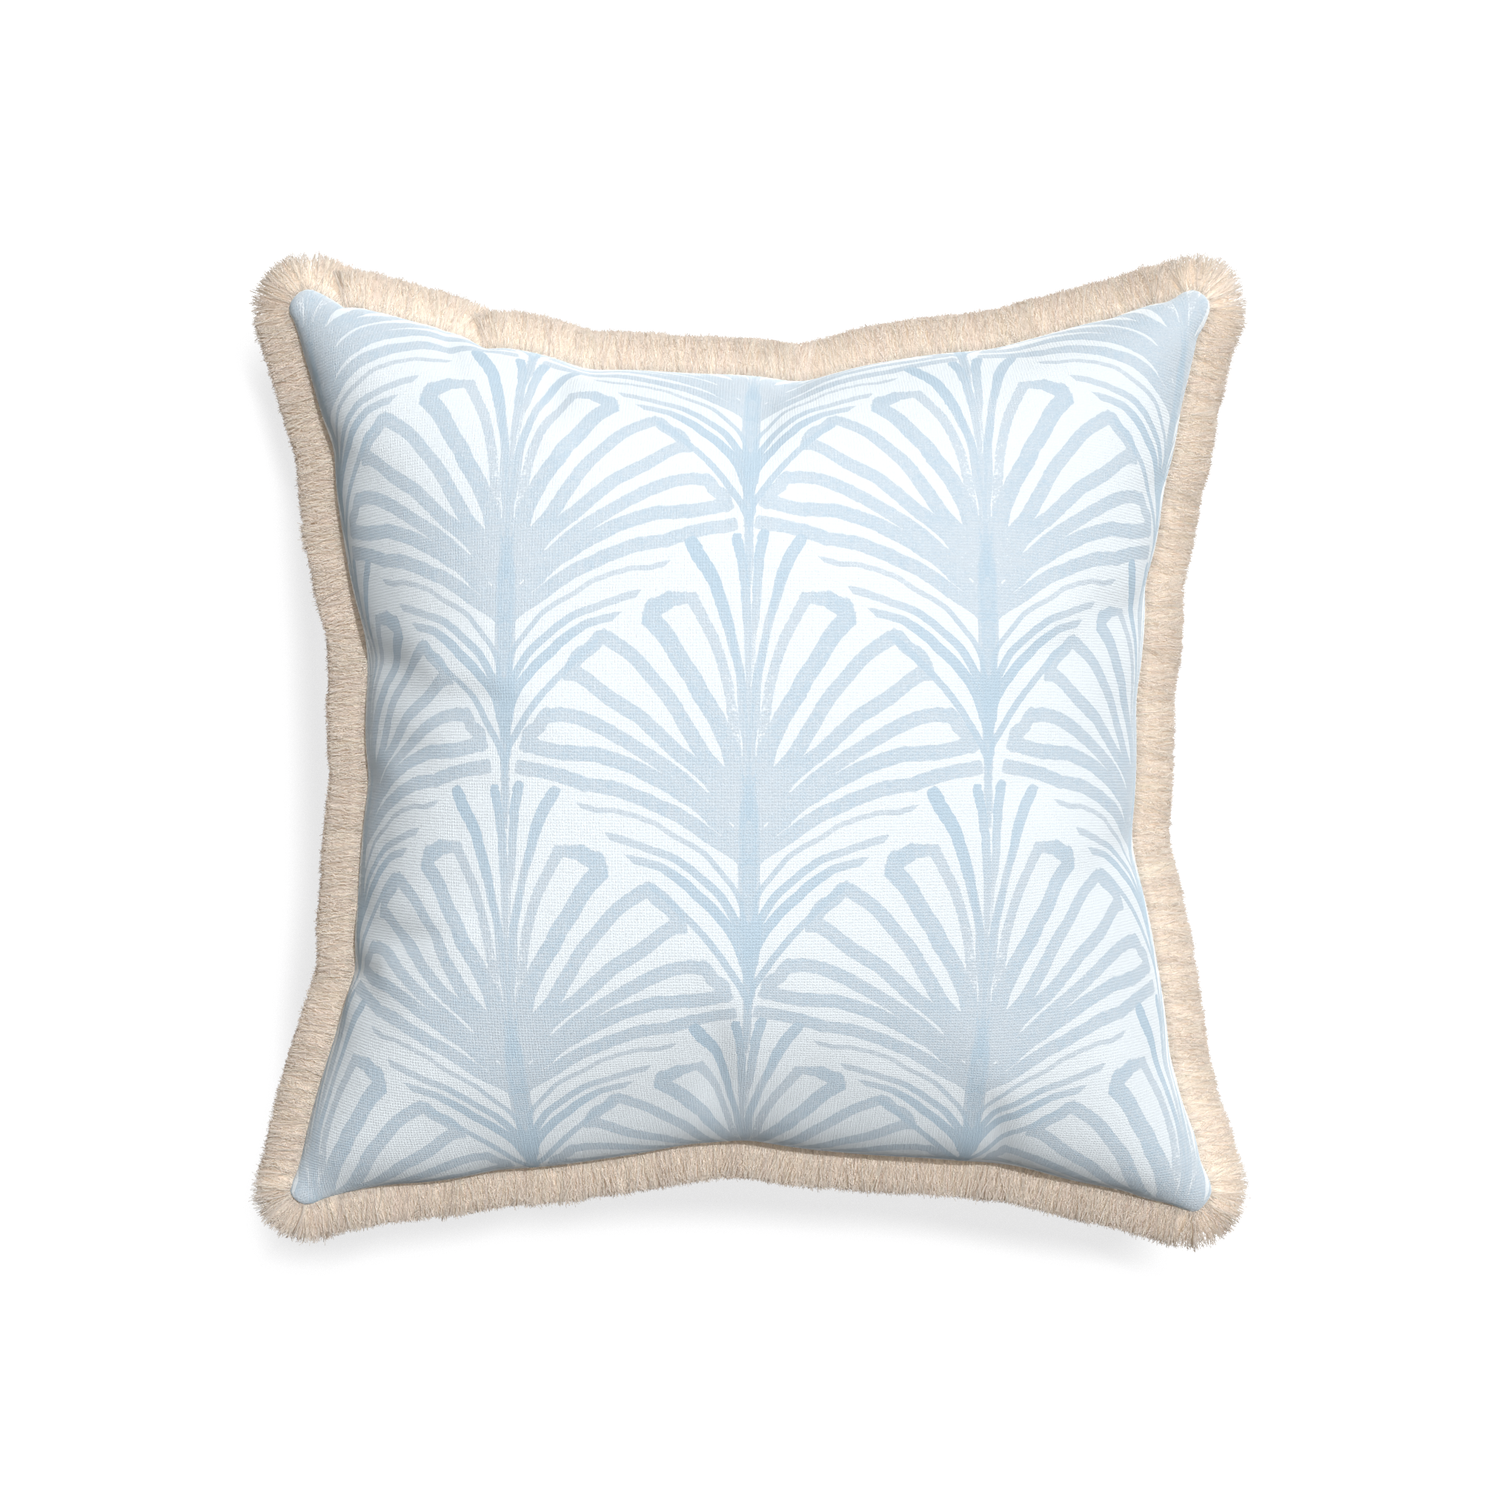 20-square suzy sky custom pillow with cream fringe on white background